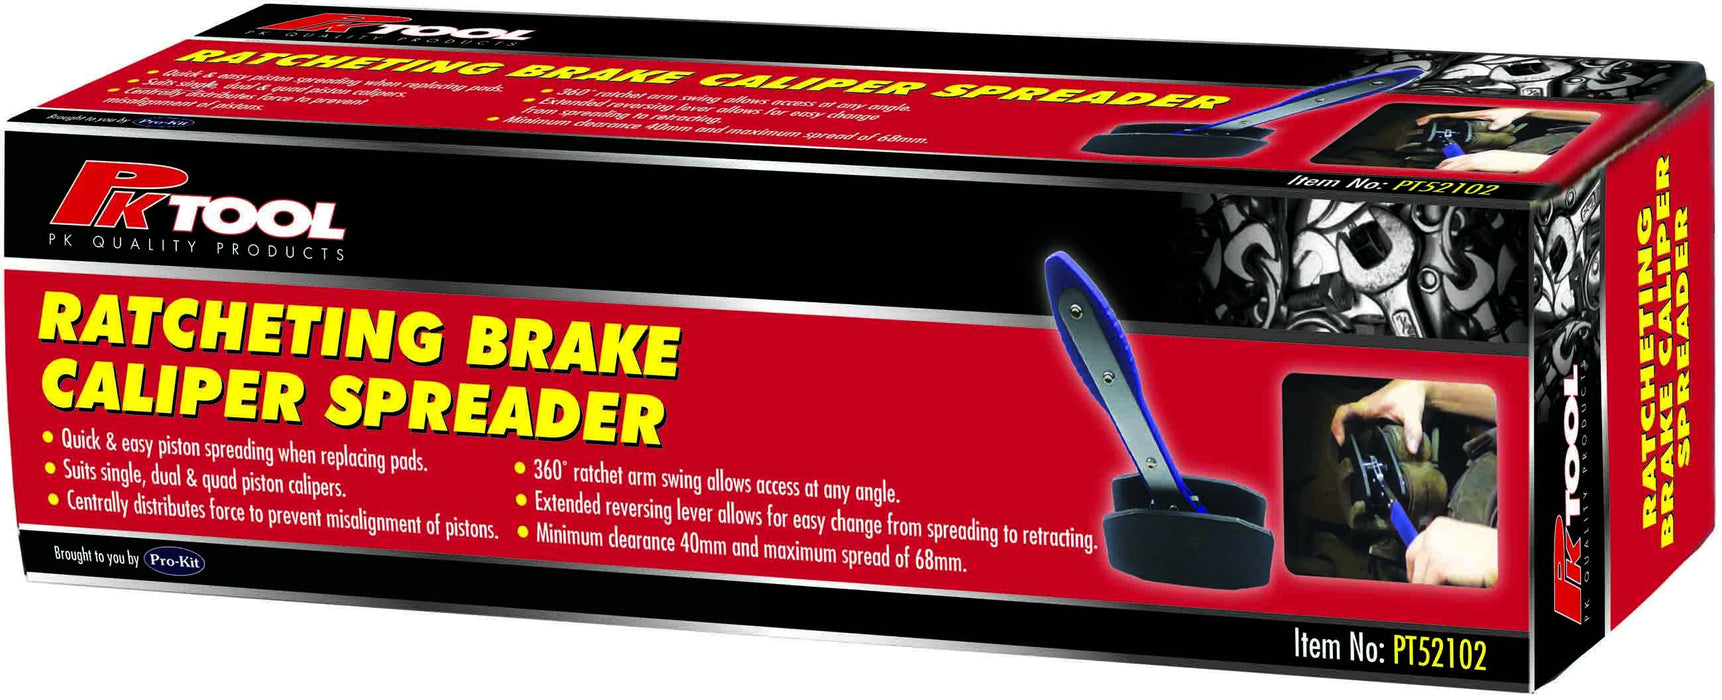 Ratcheting Brake Caliper Spreader